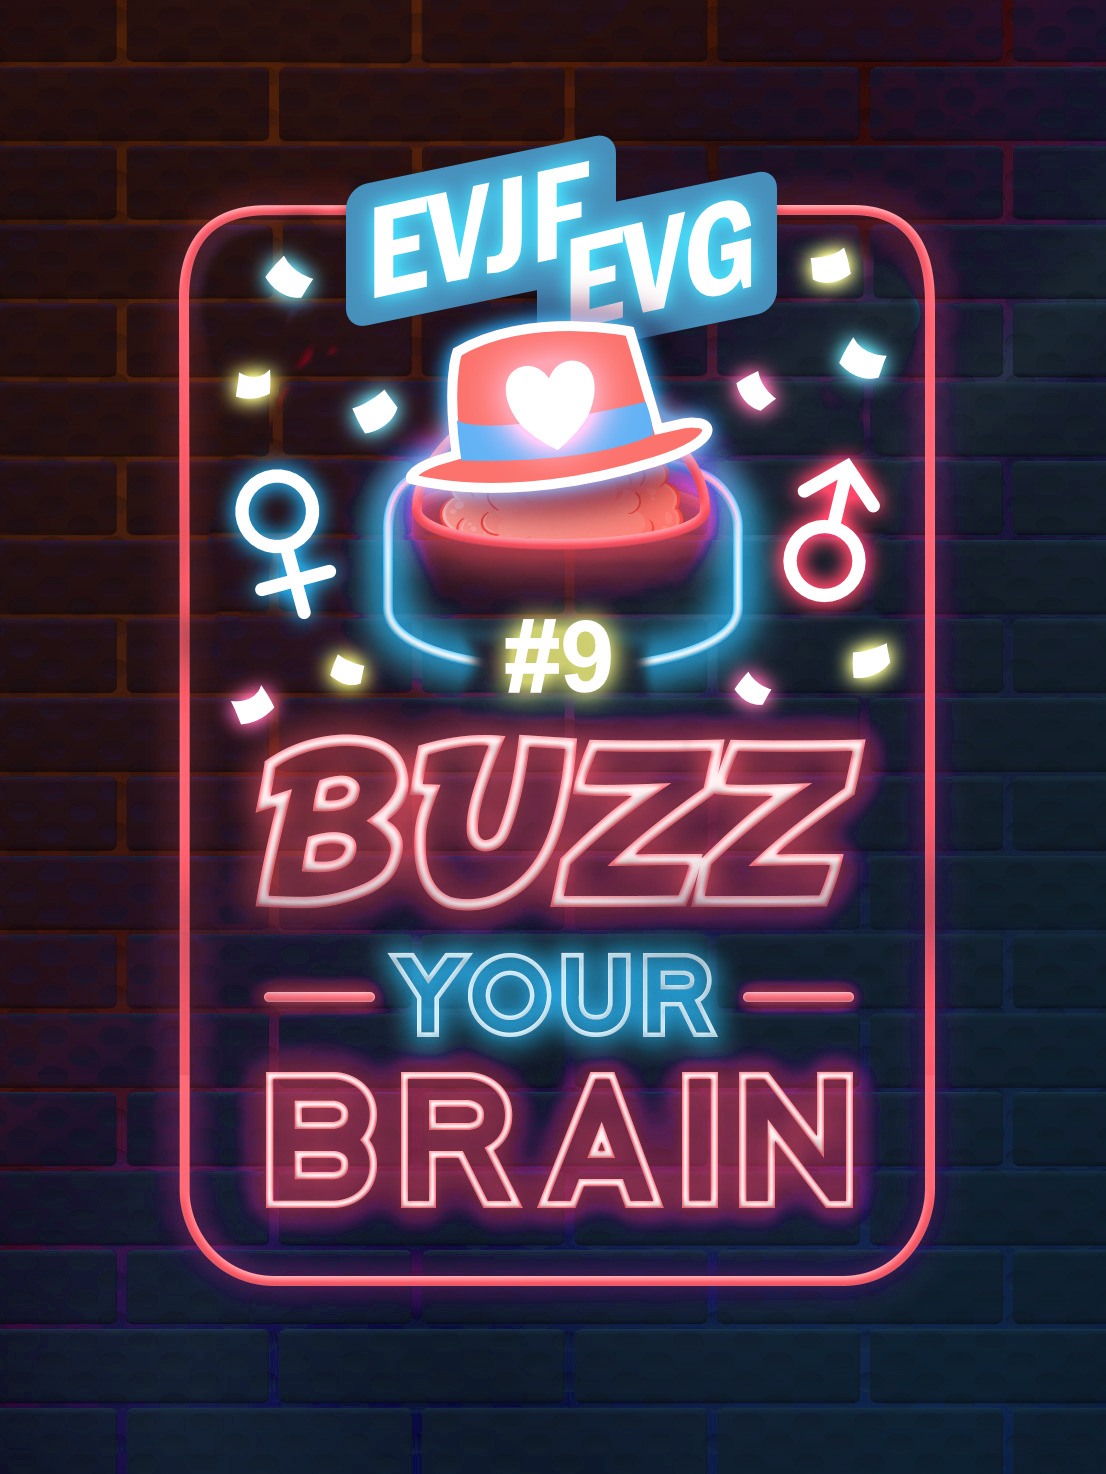 Affiche Quiz Game spécial EVJF EVG